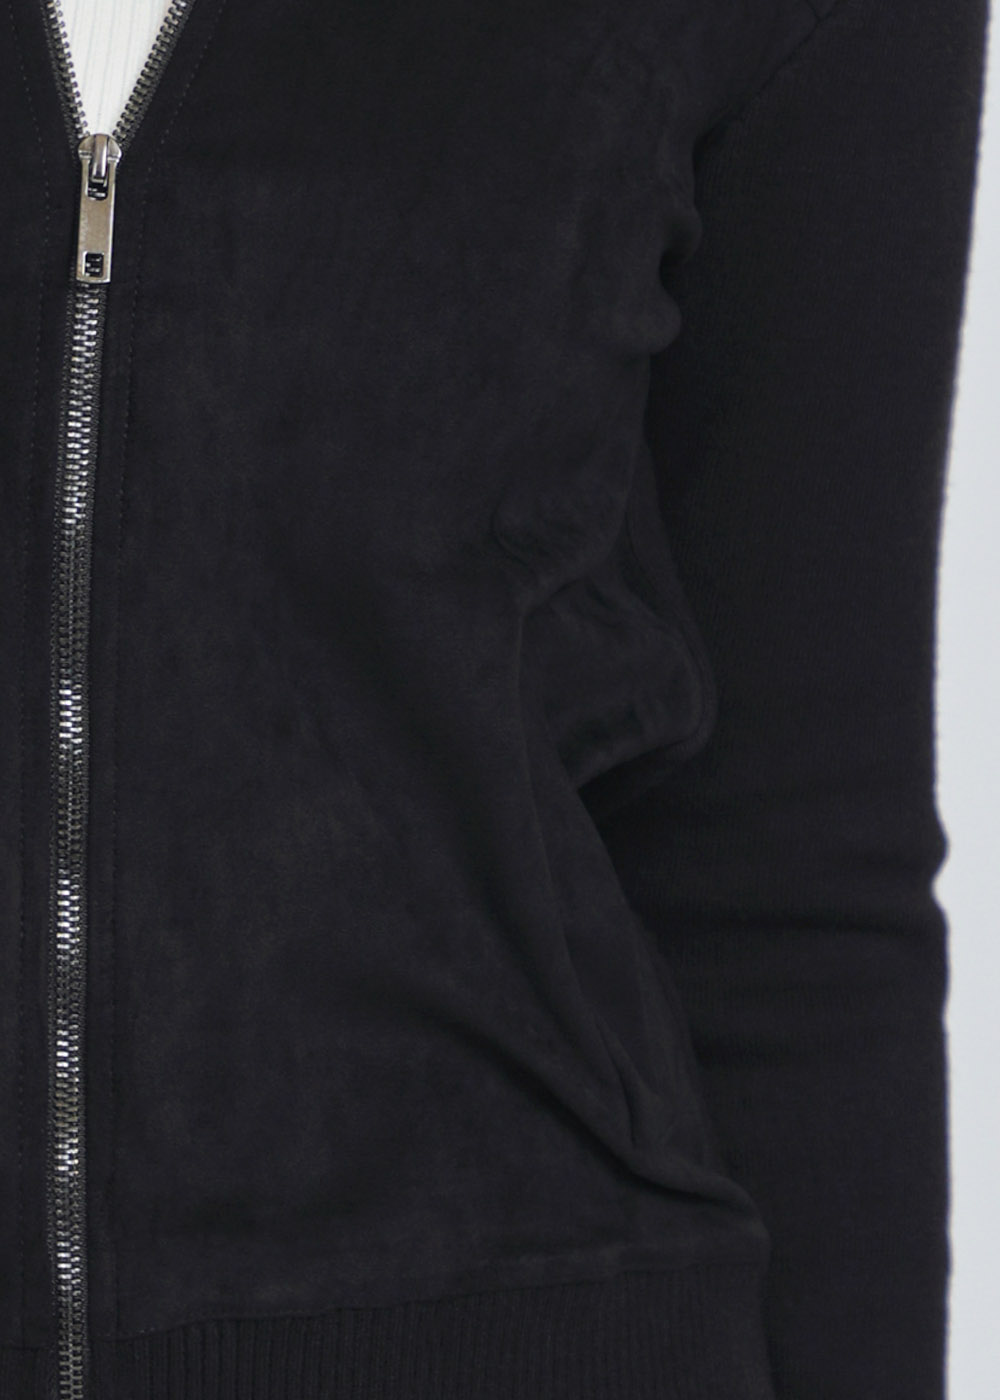 Smooth-textured Black Cardigan with Zip Closure